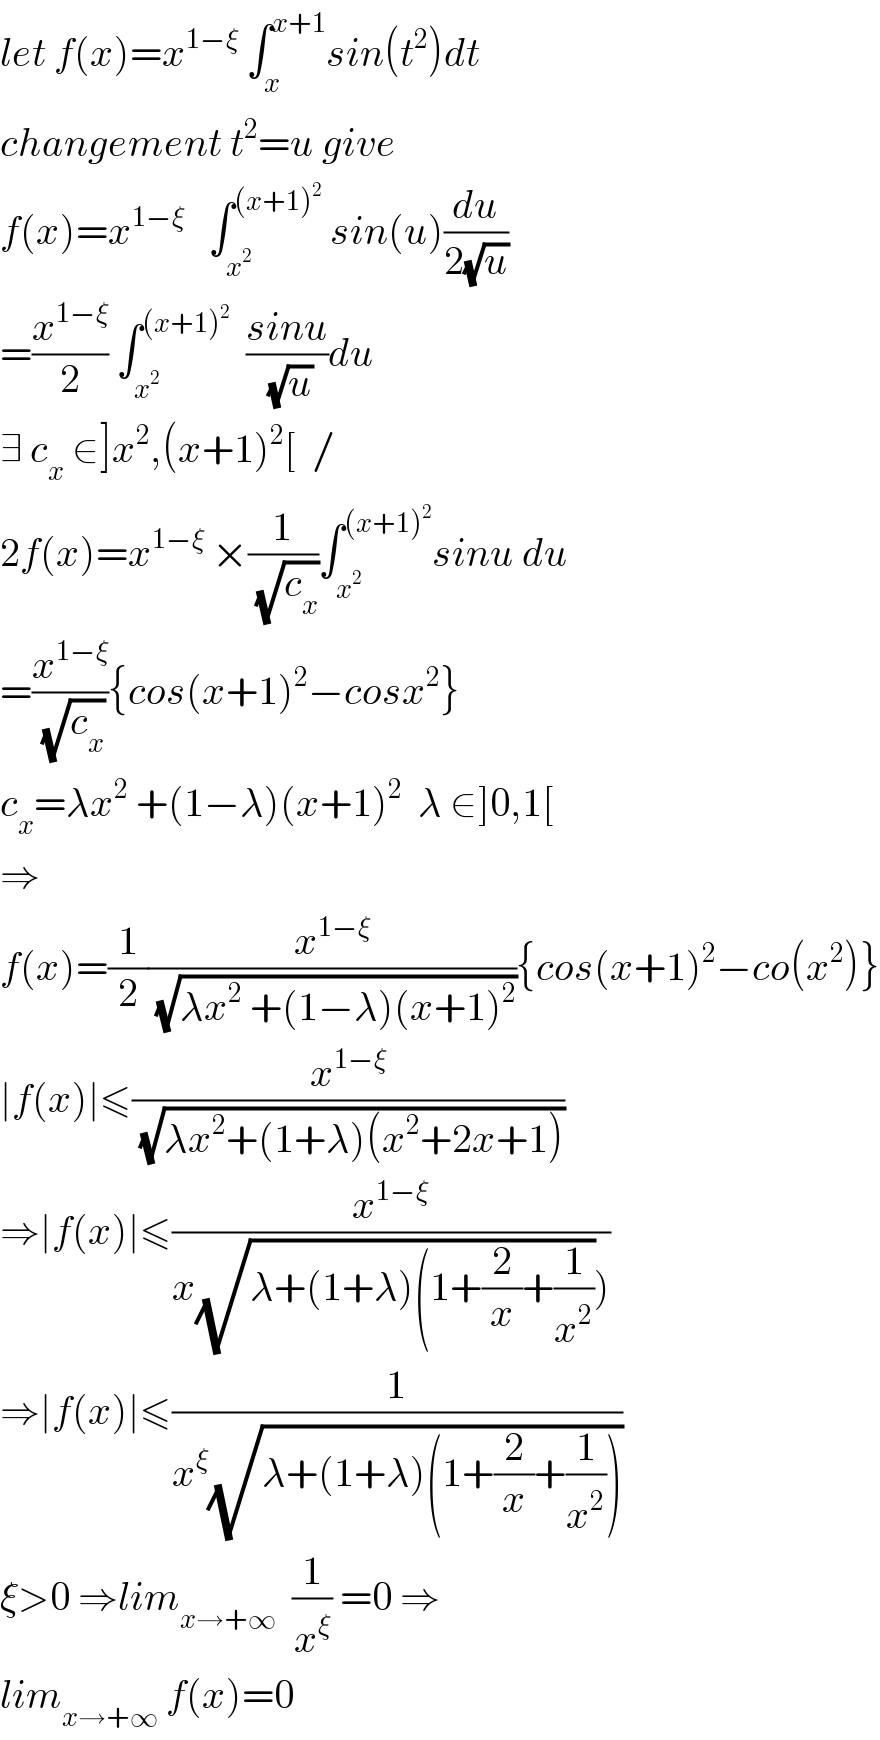 let f(x)=x^(1−ξ)  ∫_x ^(x+1) sin(t^2 )dt  changement t^2 =u give  f(x)=x^(1−ξ)    ∫_x^2  ^((x+1)^2 )  sin(u)(du/(2(√u)))  =(x^(1−ξ) /2) ∫_x^2  ^((x+1)^2 )   ((sinu)/(√u))du  ∃ c_x  ∈]x^2 ,(x+1)^2 [  /  2f(x)=x^(1−ξ)  ×(1/(√c_x ))∫_x^2  ^((x+1)^2 ) sinu du  =(x^(1−ξ) /(√c_x )){cos(x+1)^2 −cosx^2 }  c_x =λx^2  +(1−λ)(x+1)^2   λ ∈]0,1[  ⇒  f(x)=(1/2)(x^(1−ξ) /(√(λx^2  +(1−λ)(x+1)^2 ))){cos(x+1)^2 −co(x^2 )}  ∣f(x)∣≤(x^(1−ξ) /(√(λx^2 +(1+λ)(x^2 +2x+1))))  ⇒∣f(x)∣≤(x^(1−ξ) /(x(√(λ+(1+λ)(1+(2/x)+(1/x^2 ))))))  ⇒∣f(x)∣≤(1/(x^ξ (√(λ+(1+λ)(1+(2/x)+(1/x^2 ))))))  ξ>0 ⇒lim_(x→+∞)   (1/x^ξ ) =0 ⇒  lim_(x→+∞)  f(x)=0  